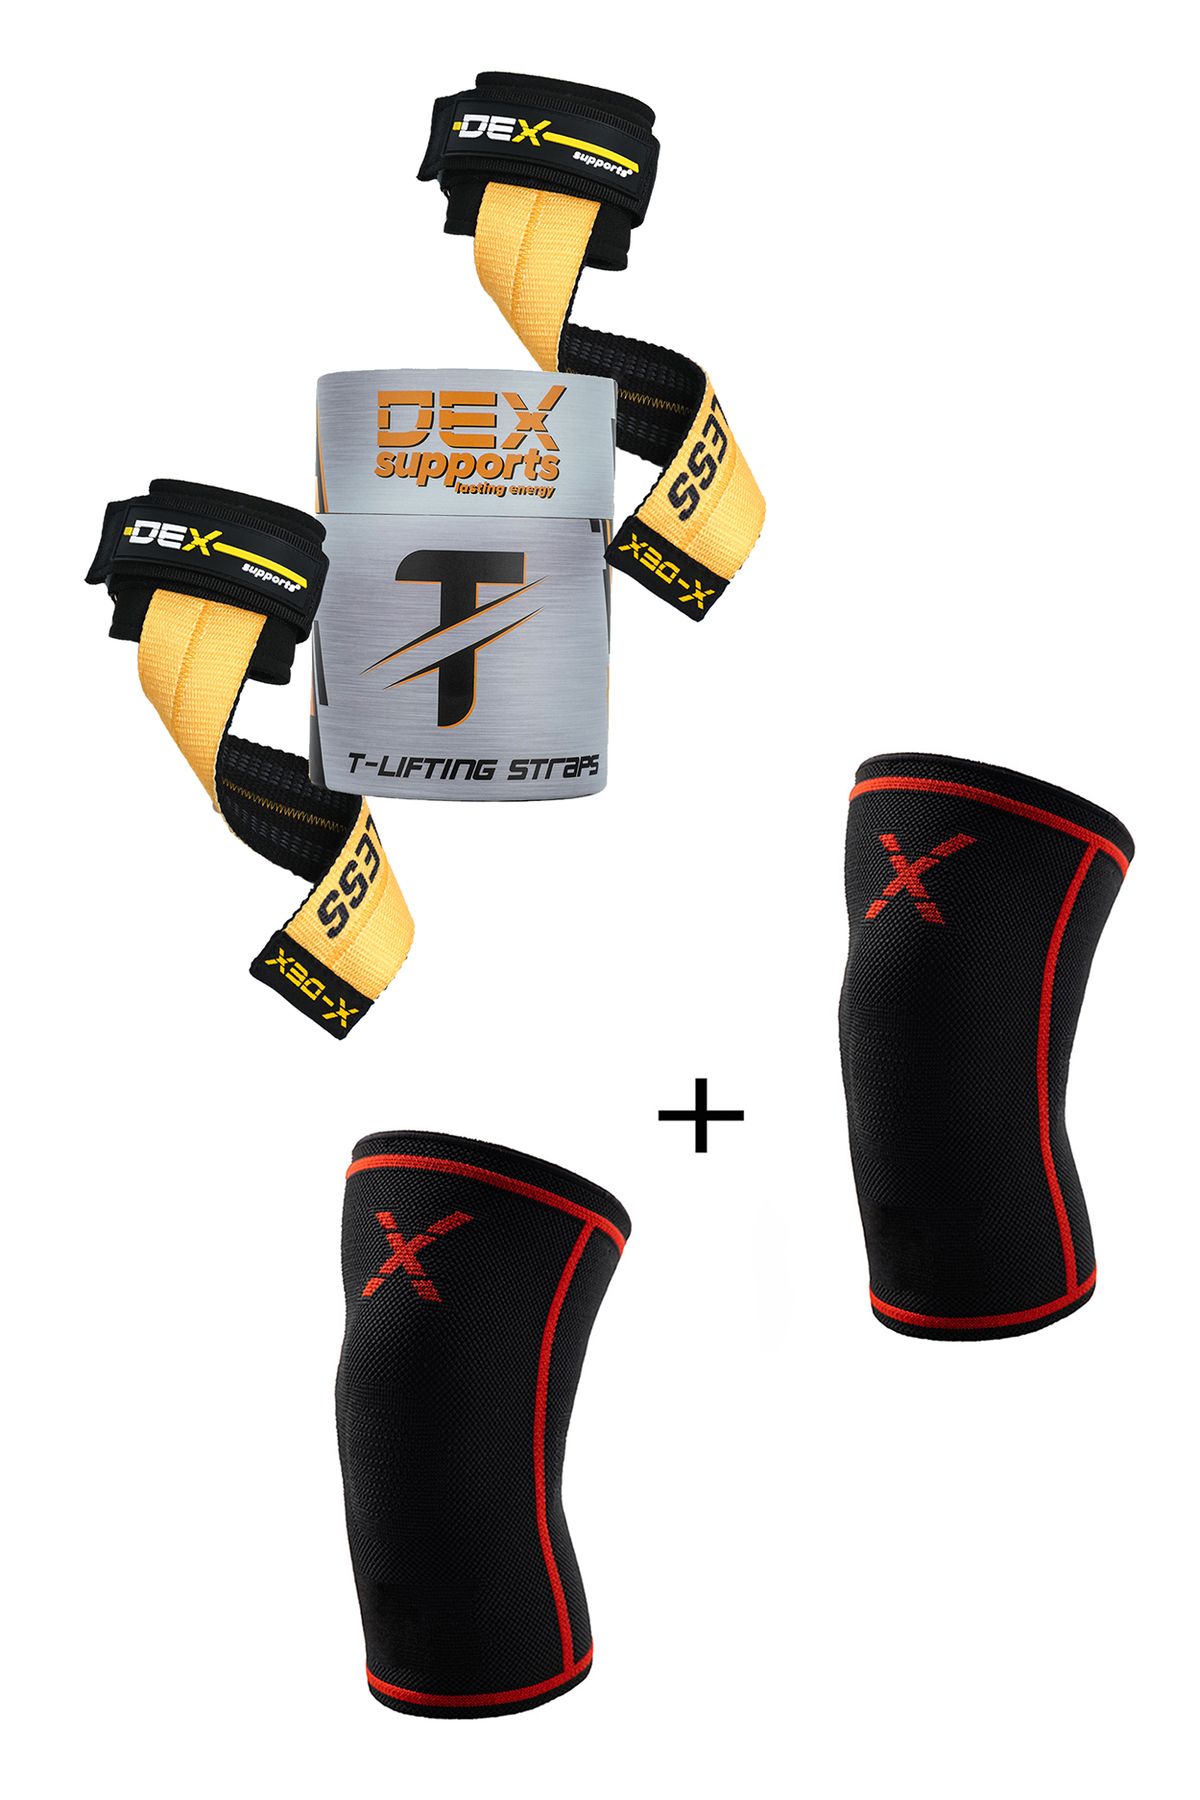 Dex Supports Lasting Energy Spor Antrenman Dizliği Knee Sleeve + Halter Kayışı T-Grips 2'Li Set